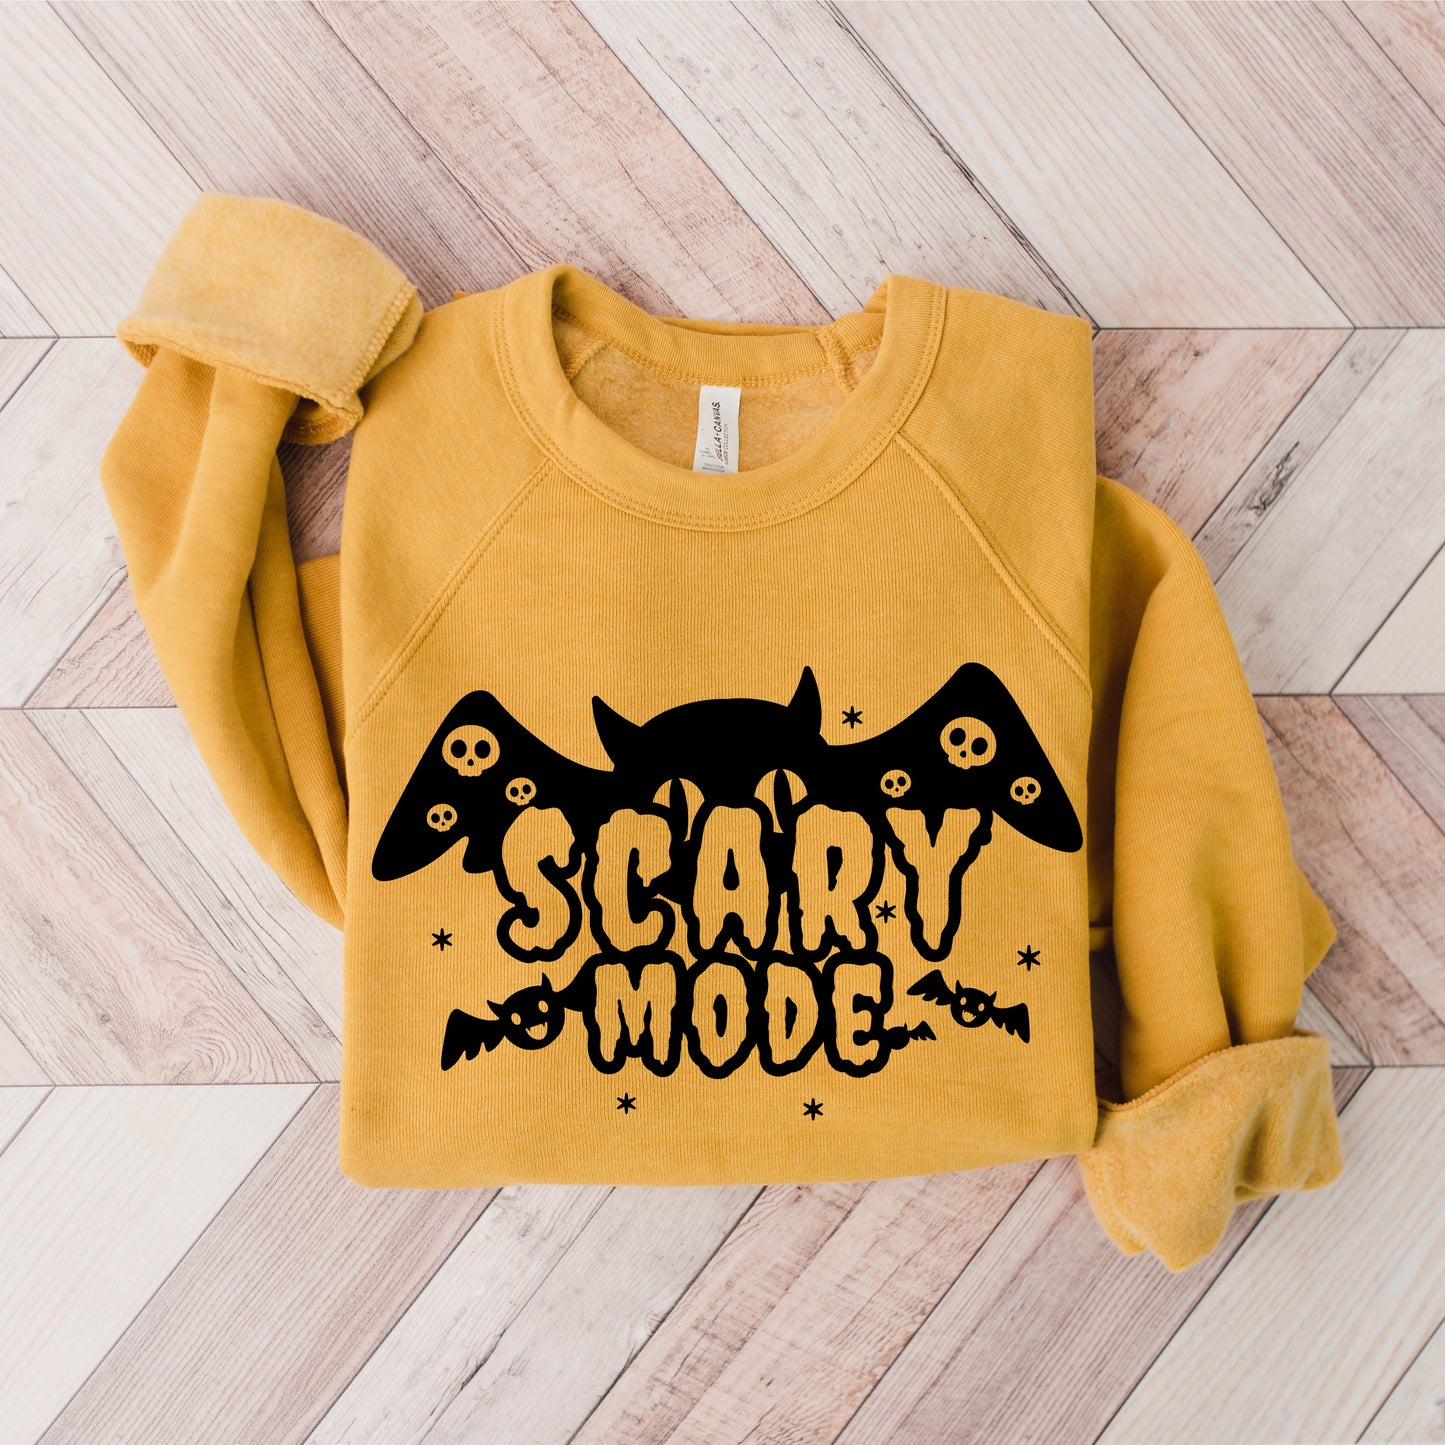 Scary Mode Bat | Bella Canvas Sweatshirt